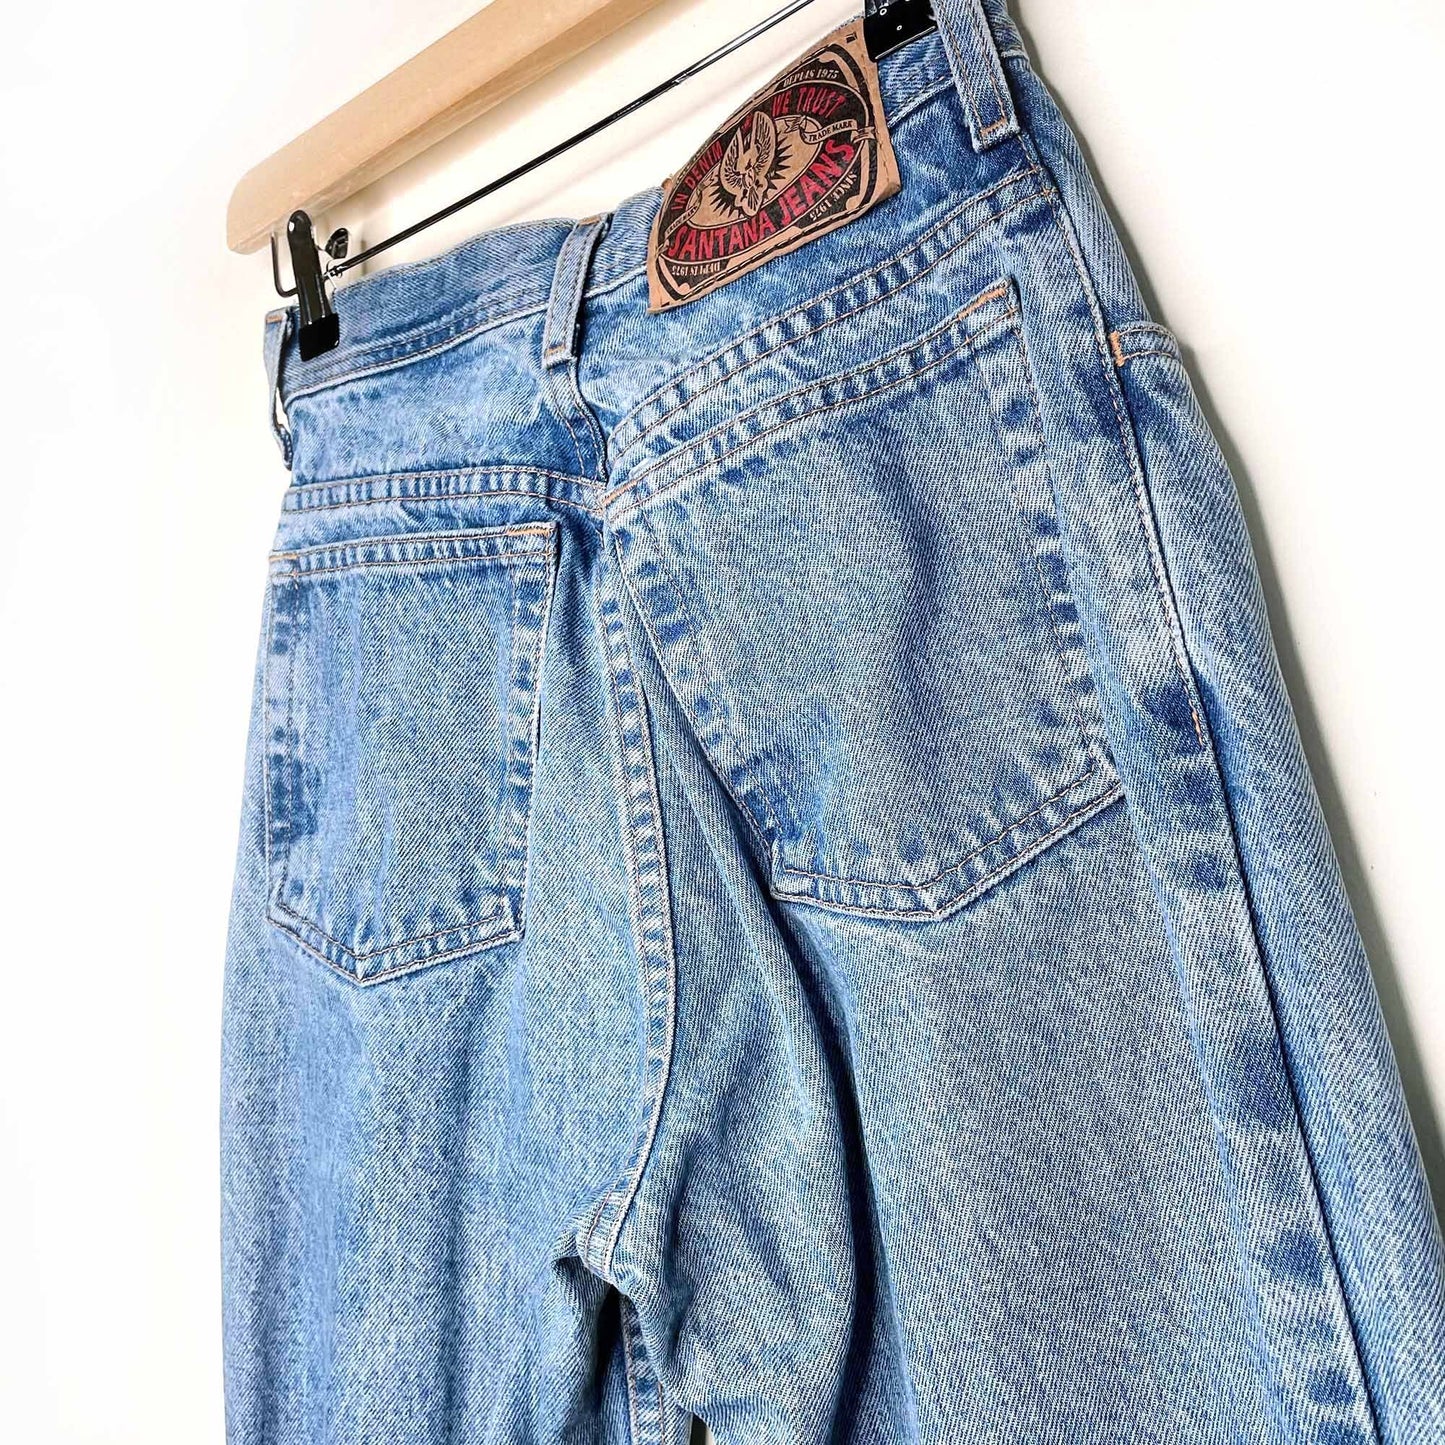 vintage santana parasuco slim high rise jeans - size 27 (25)